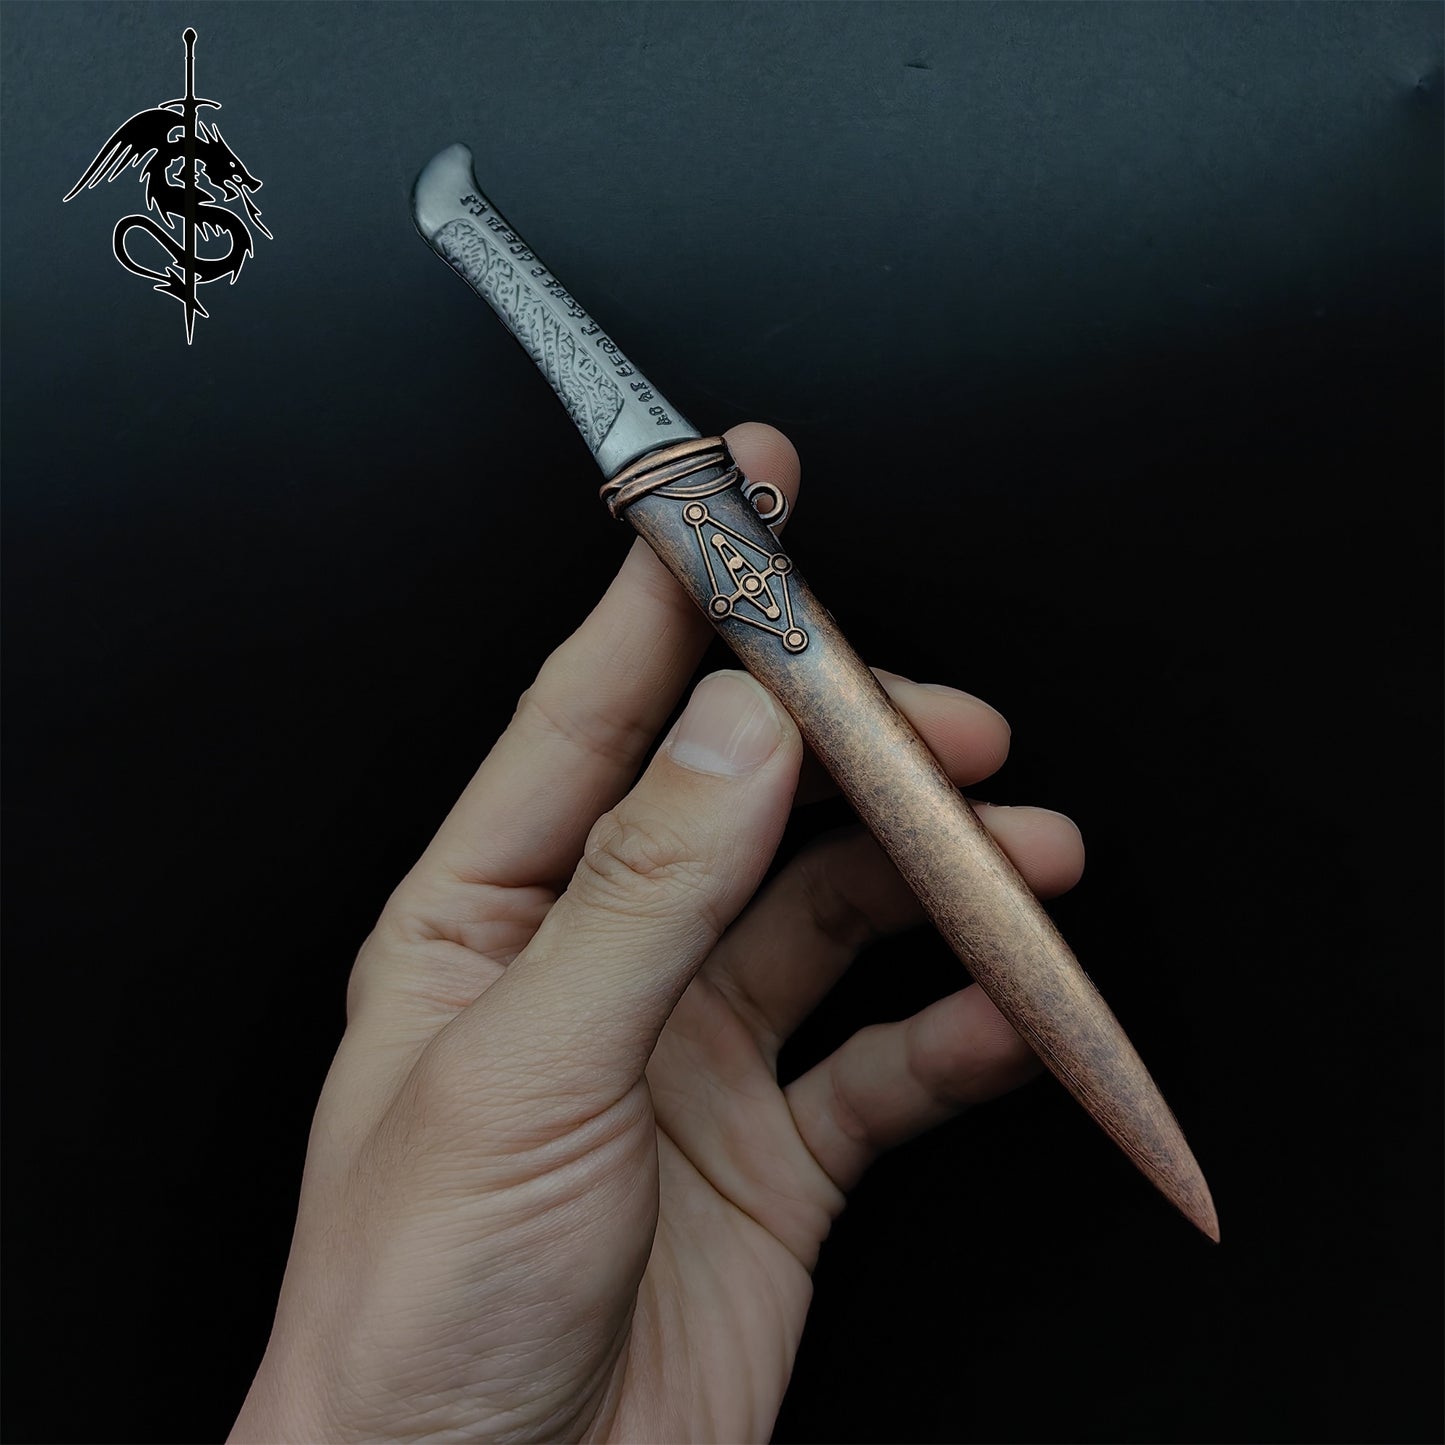 Famous Movie Dune Prop Dib'Muad's Crysknife Replica Tiny Metal Sword